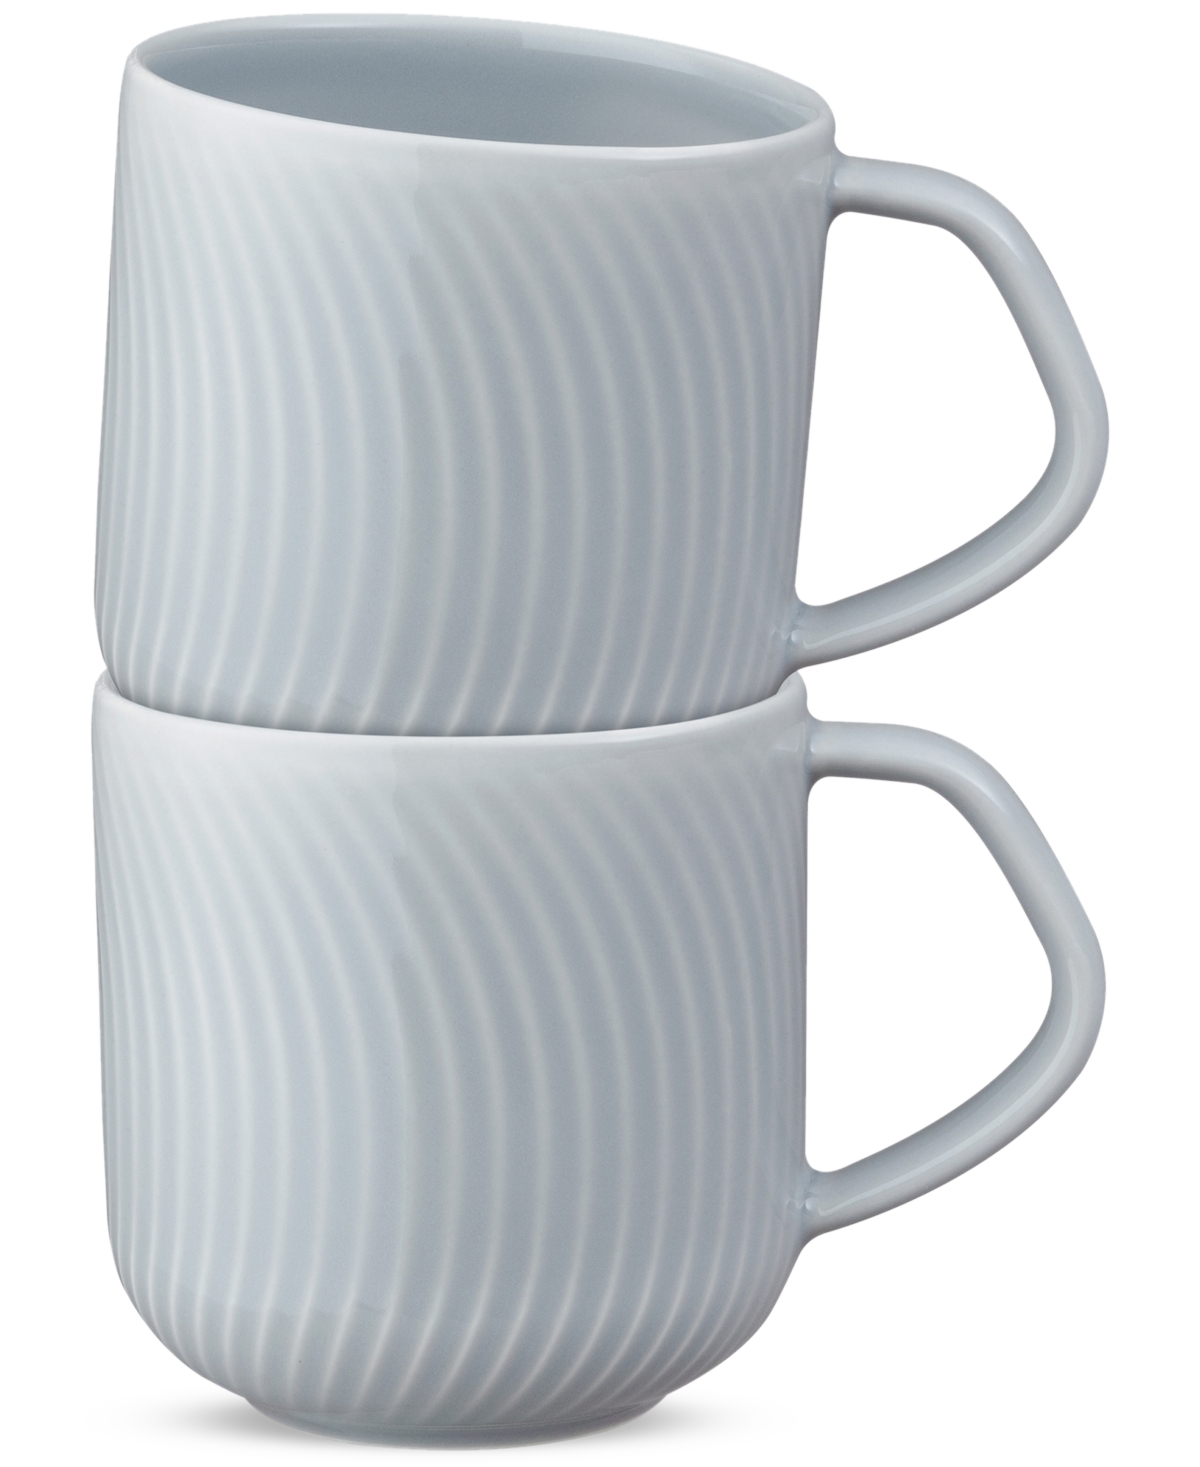 Porcelain Arc Collection Mugs, Set of 2 - Arc Grey